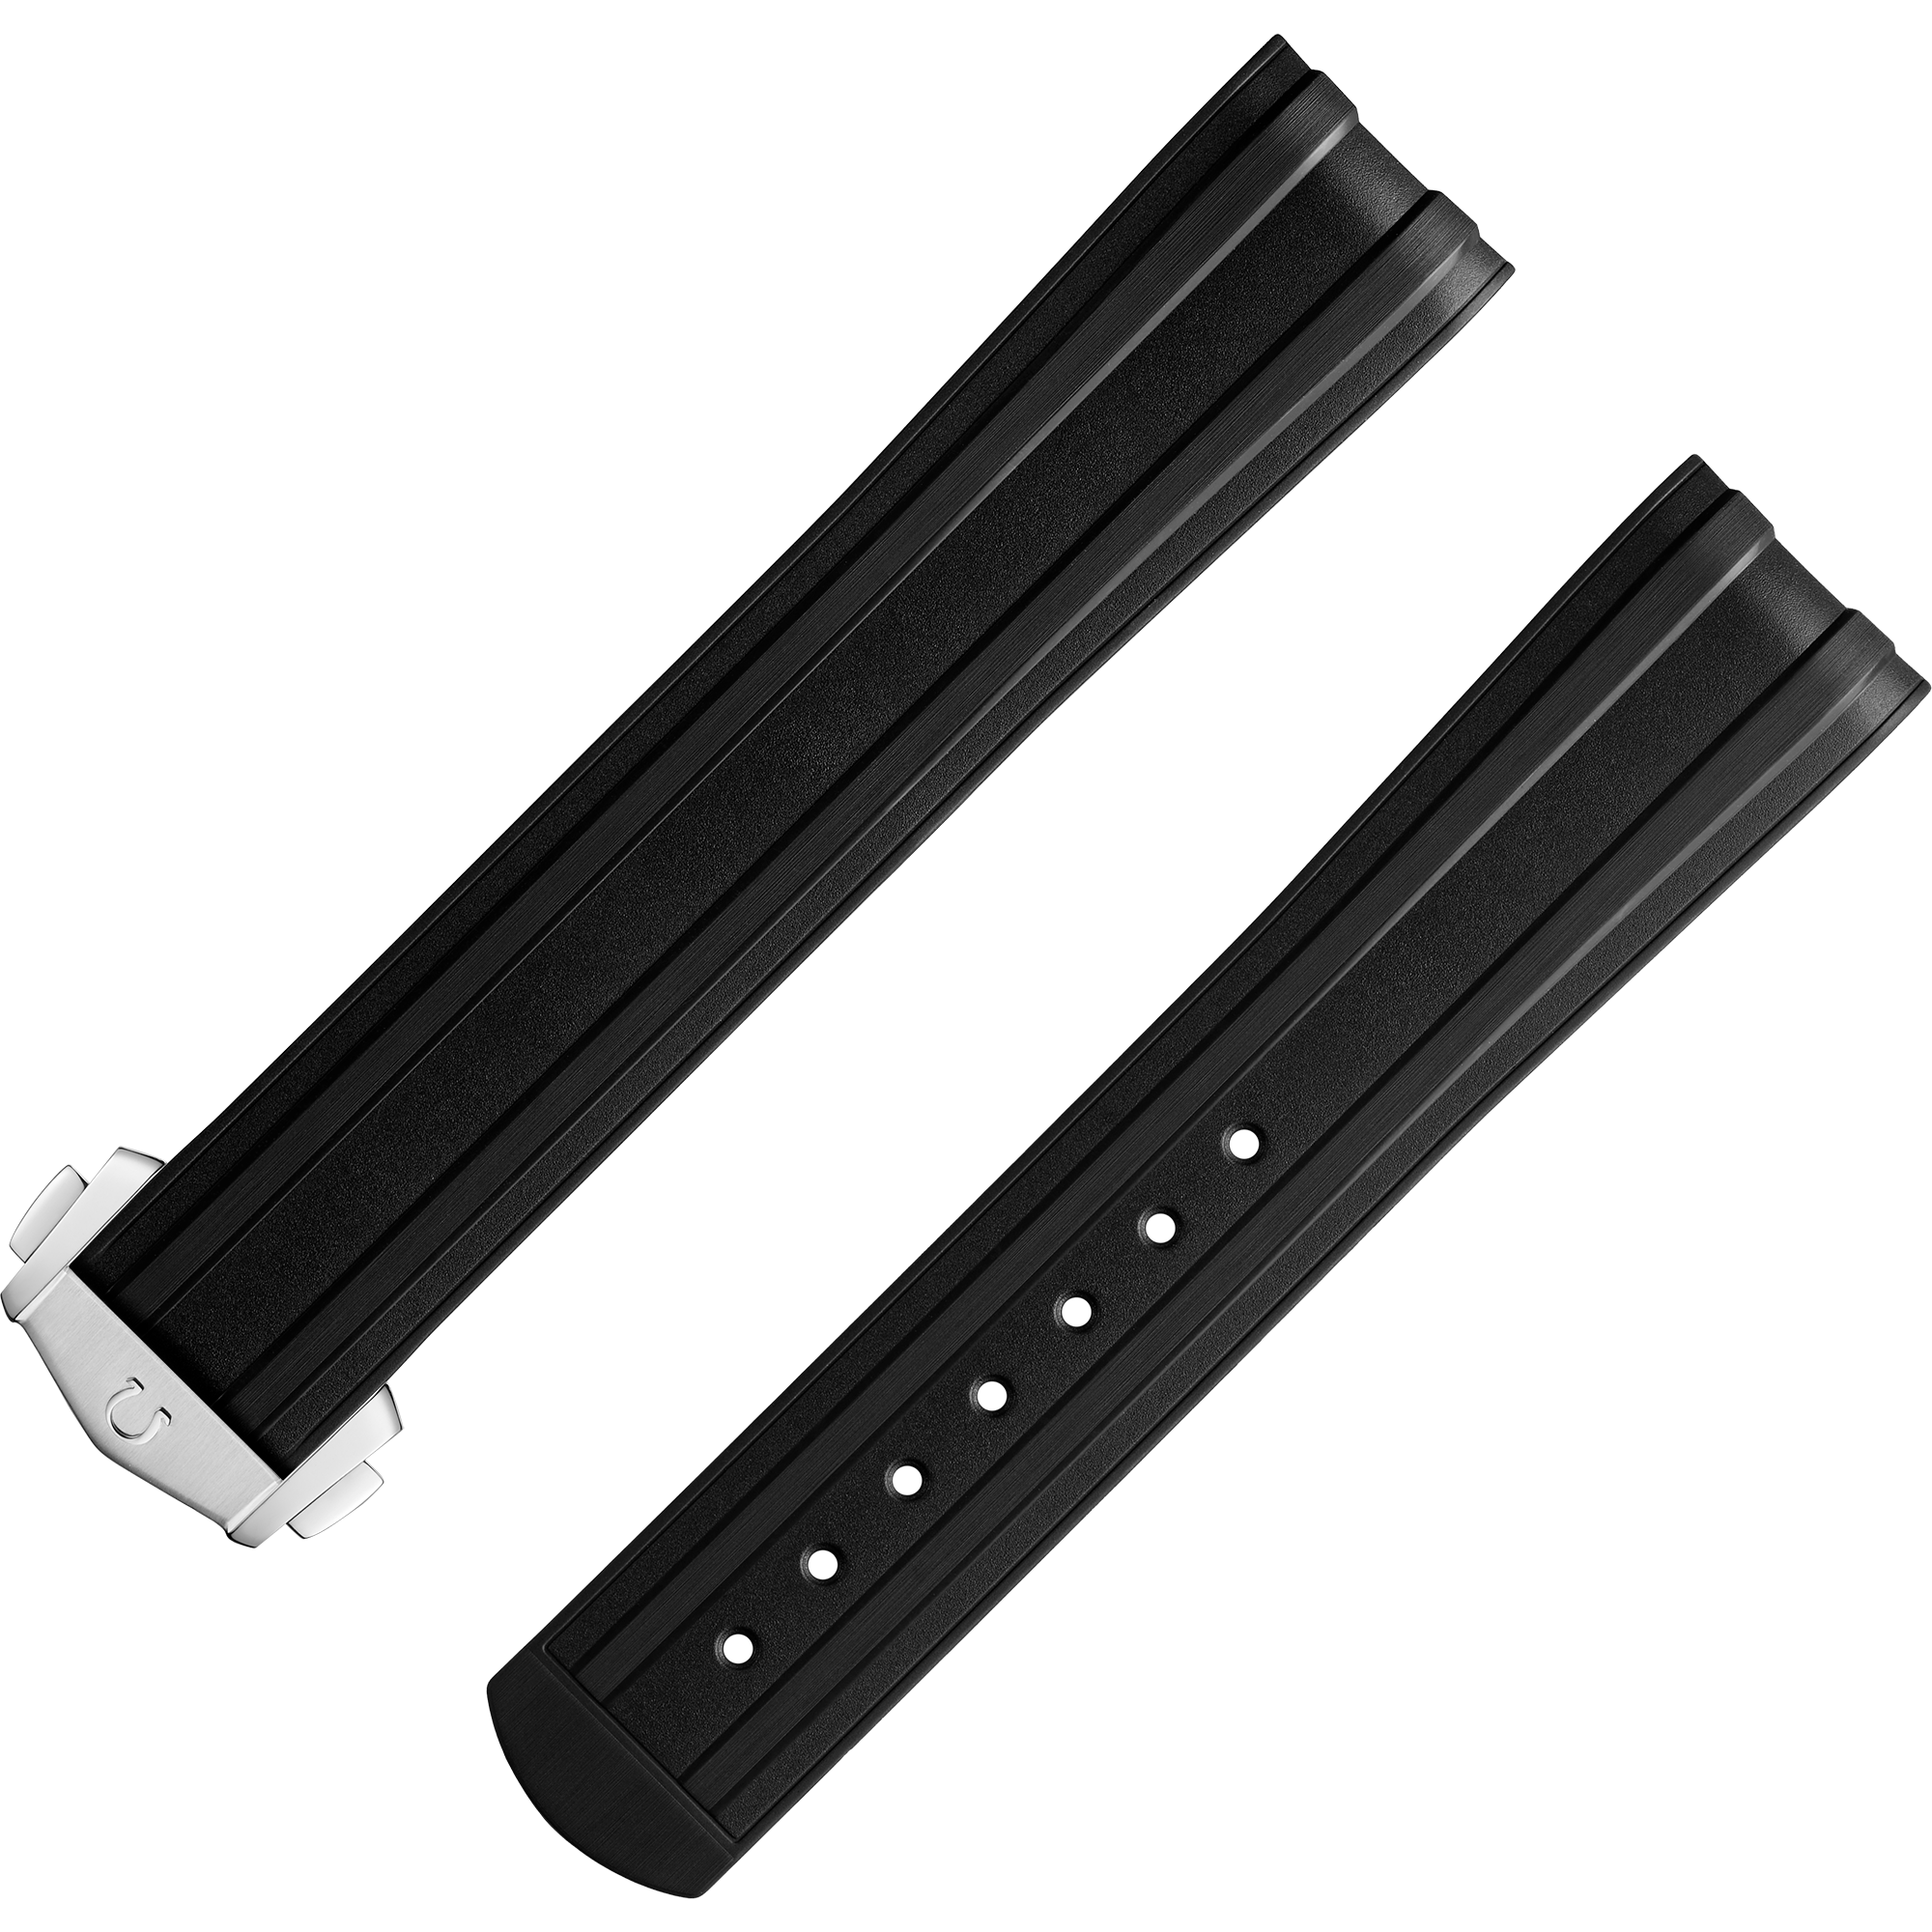 Two-piece strap - Seamaster Diver 300M black rubber strap with foldover clasp - 032CVZ015752W